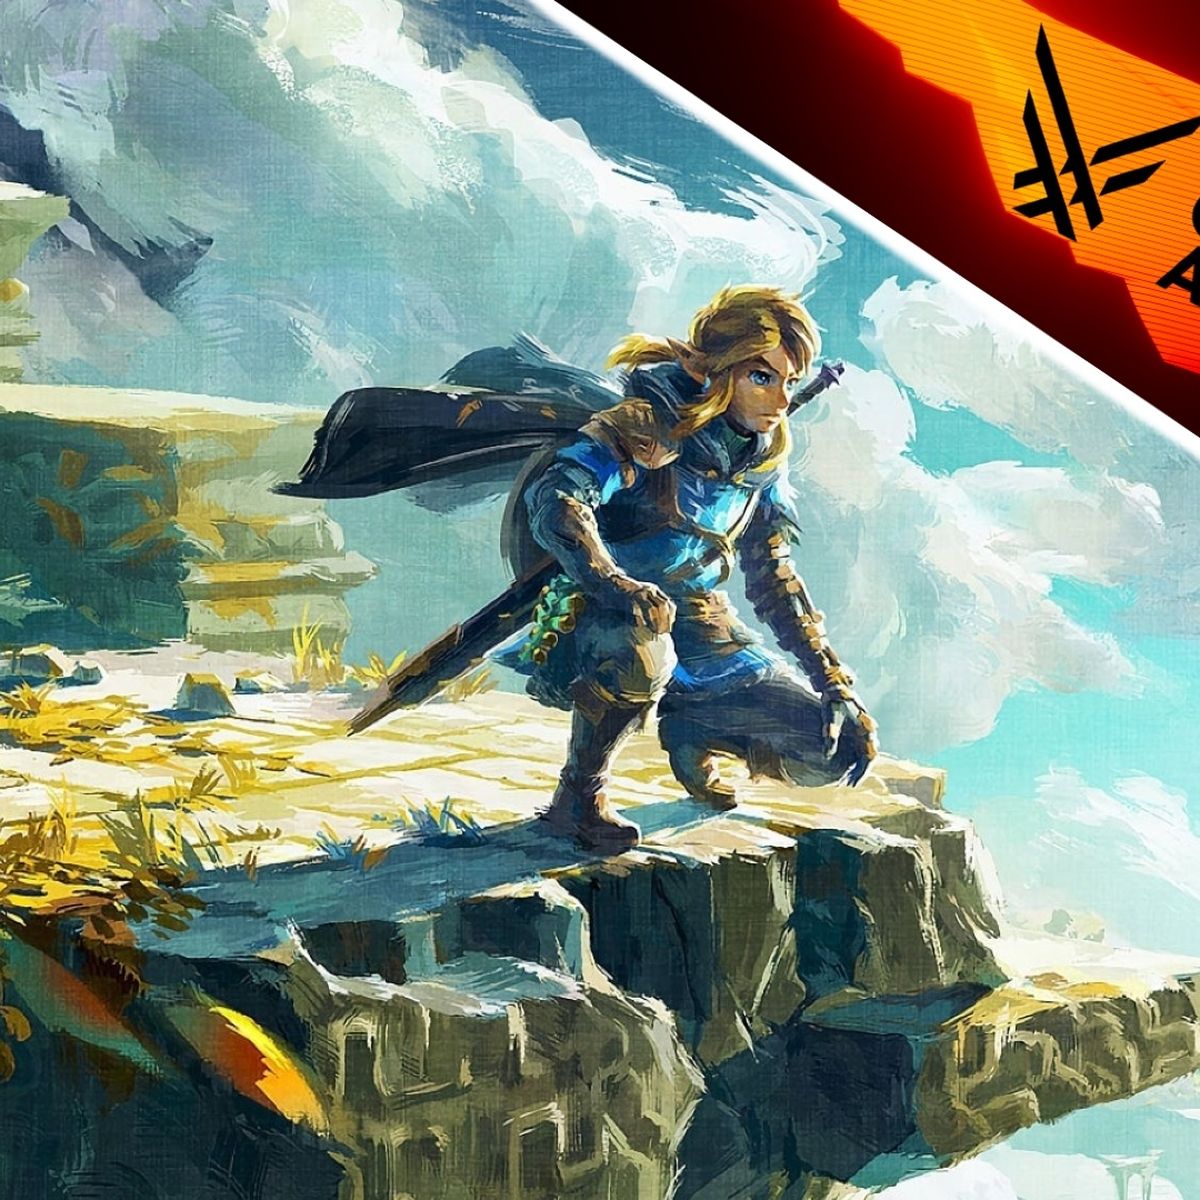 The Legend Of Zelda: Tears Of The Kingom - VA A SER GOTY 